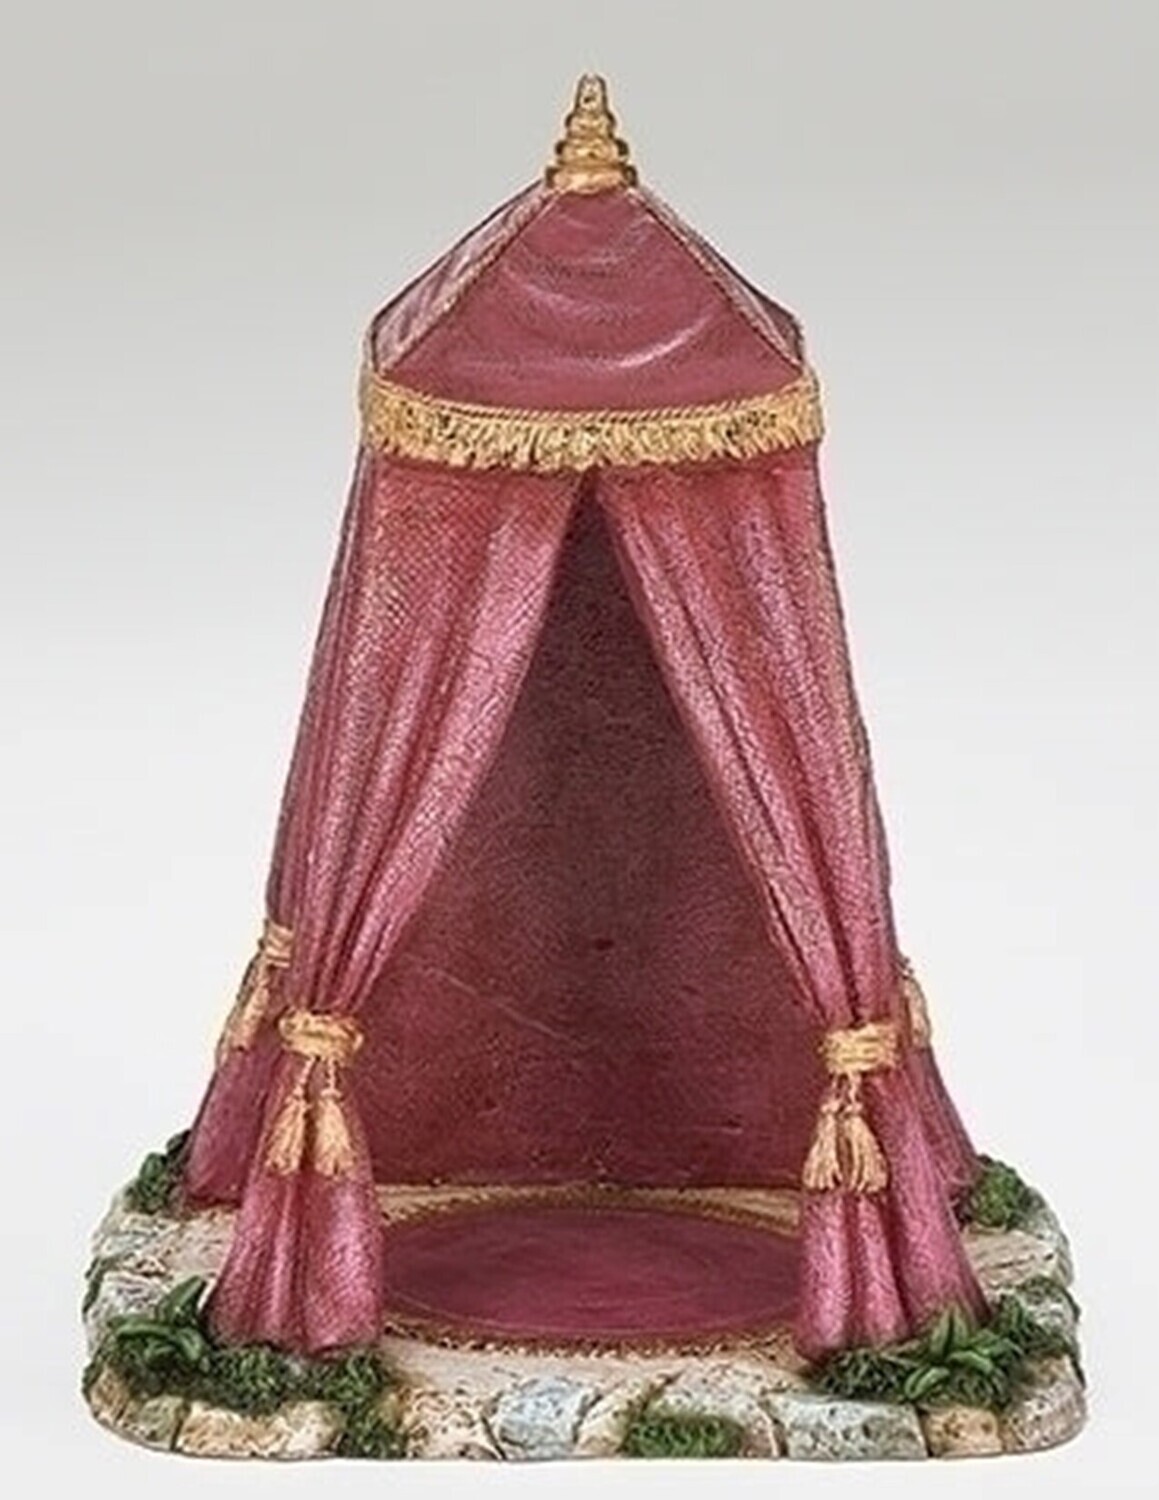 Fontanini Nativity 5" Scale "Balthazar's Burgundy King's Tent"(55616)